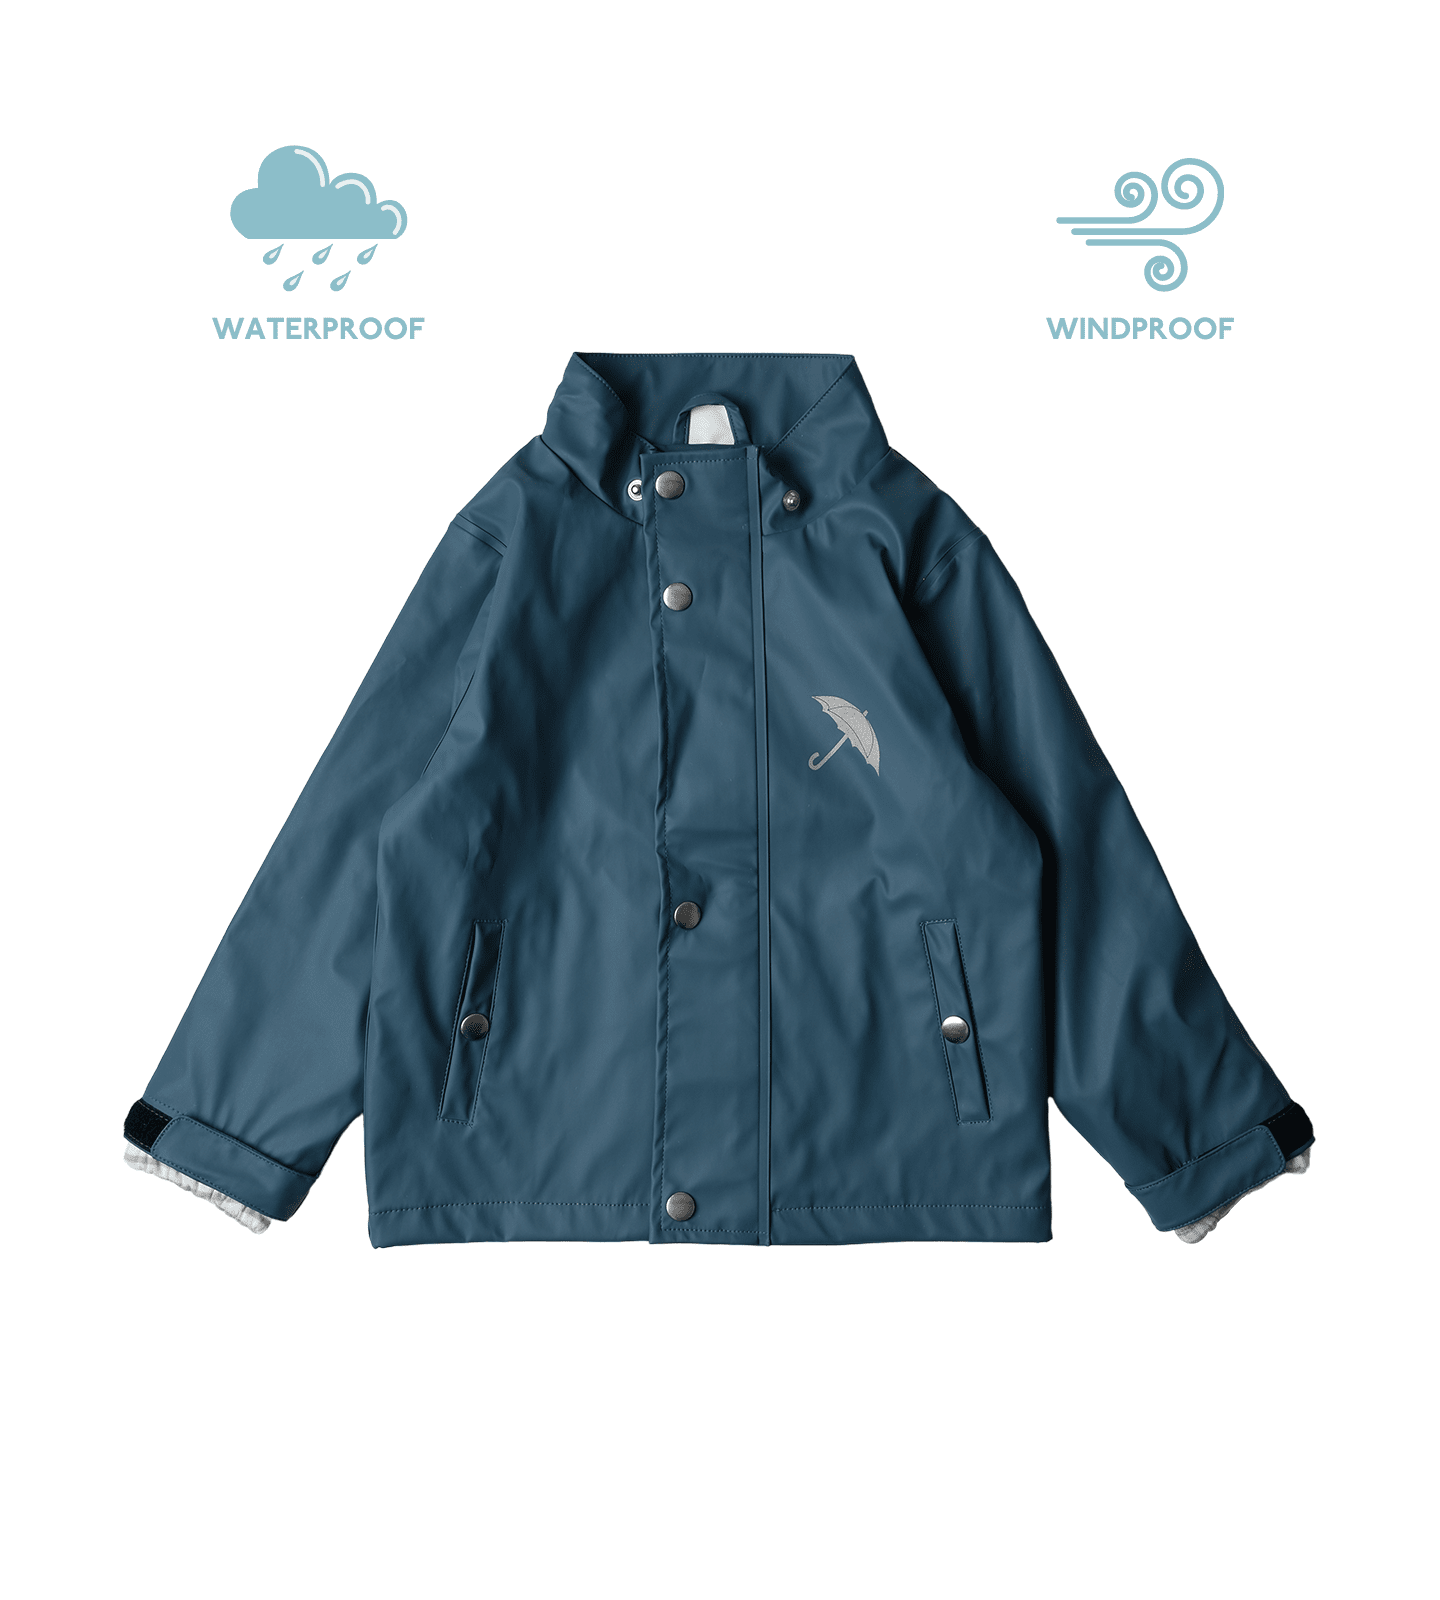 Waterproof Raincoat - Brolly Sheets NZ